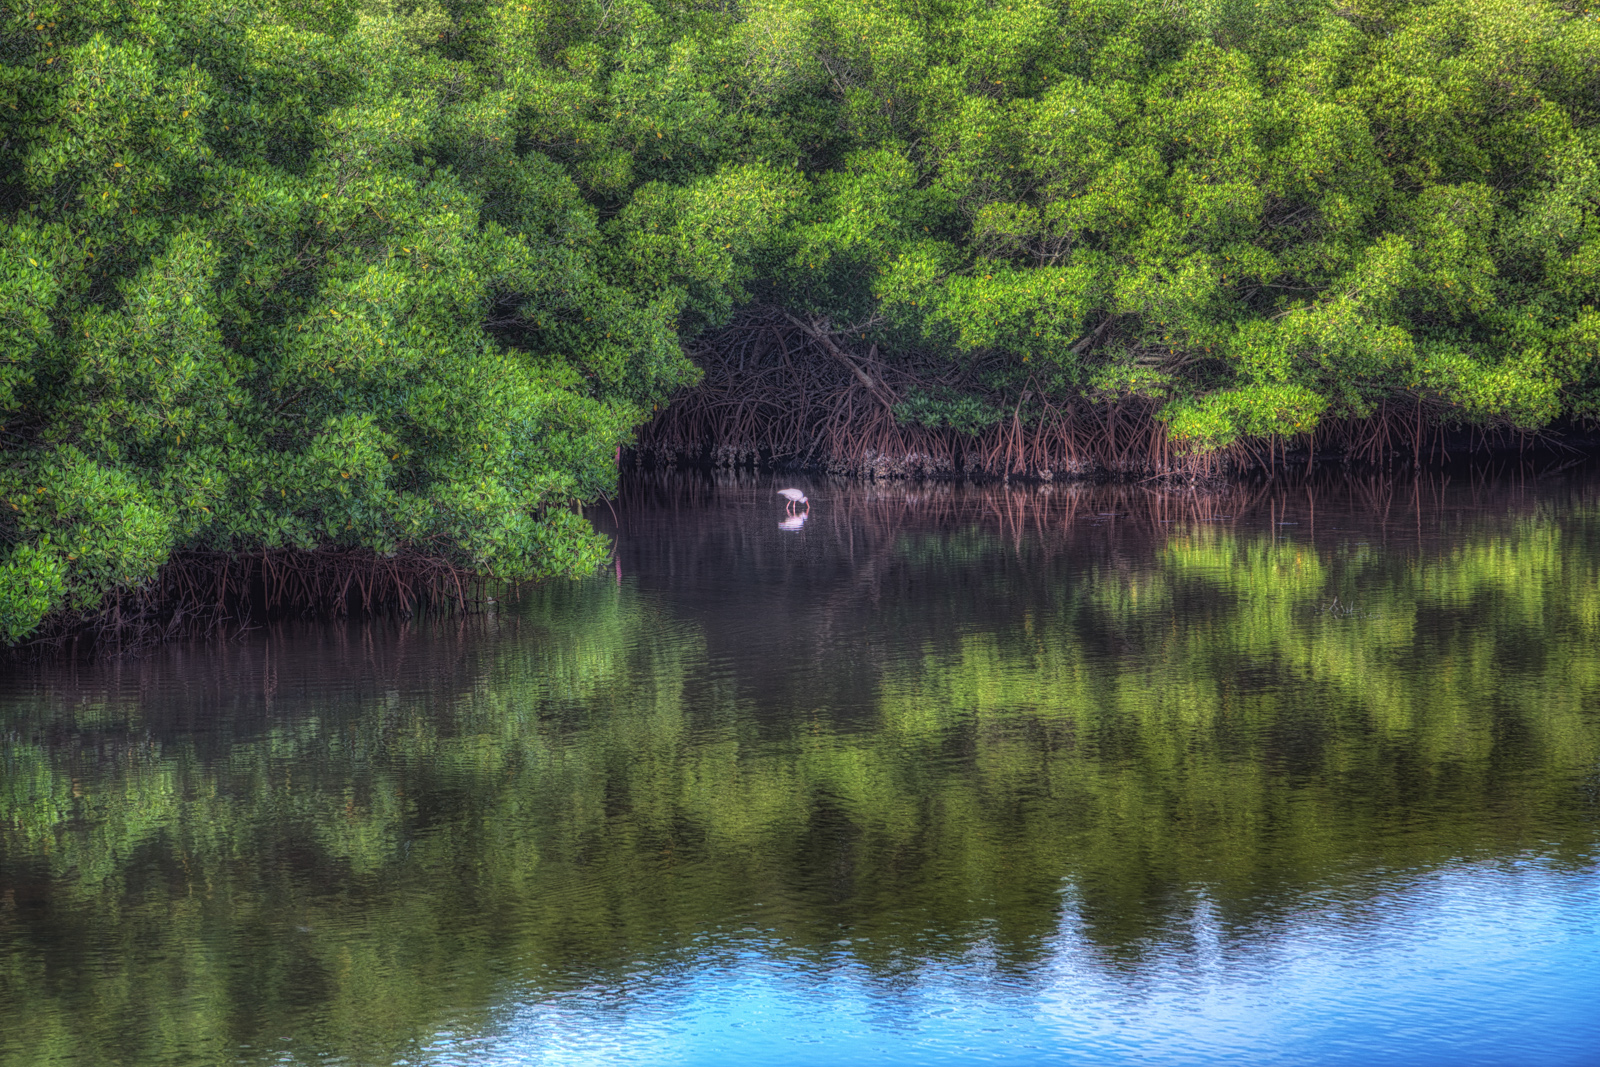 Ibis Among Mangroves at Weedon Island